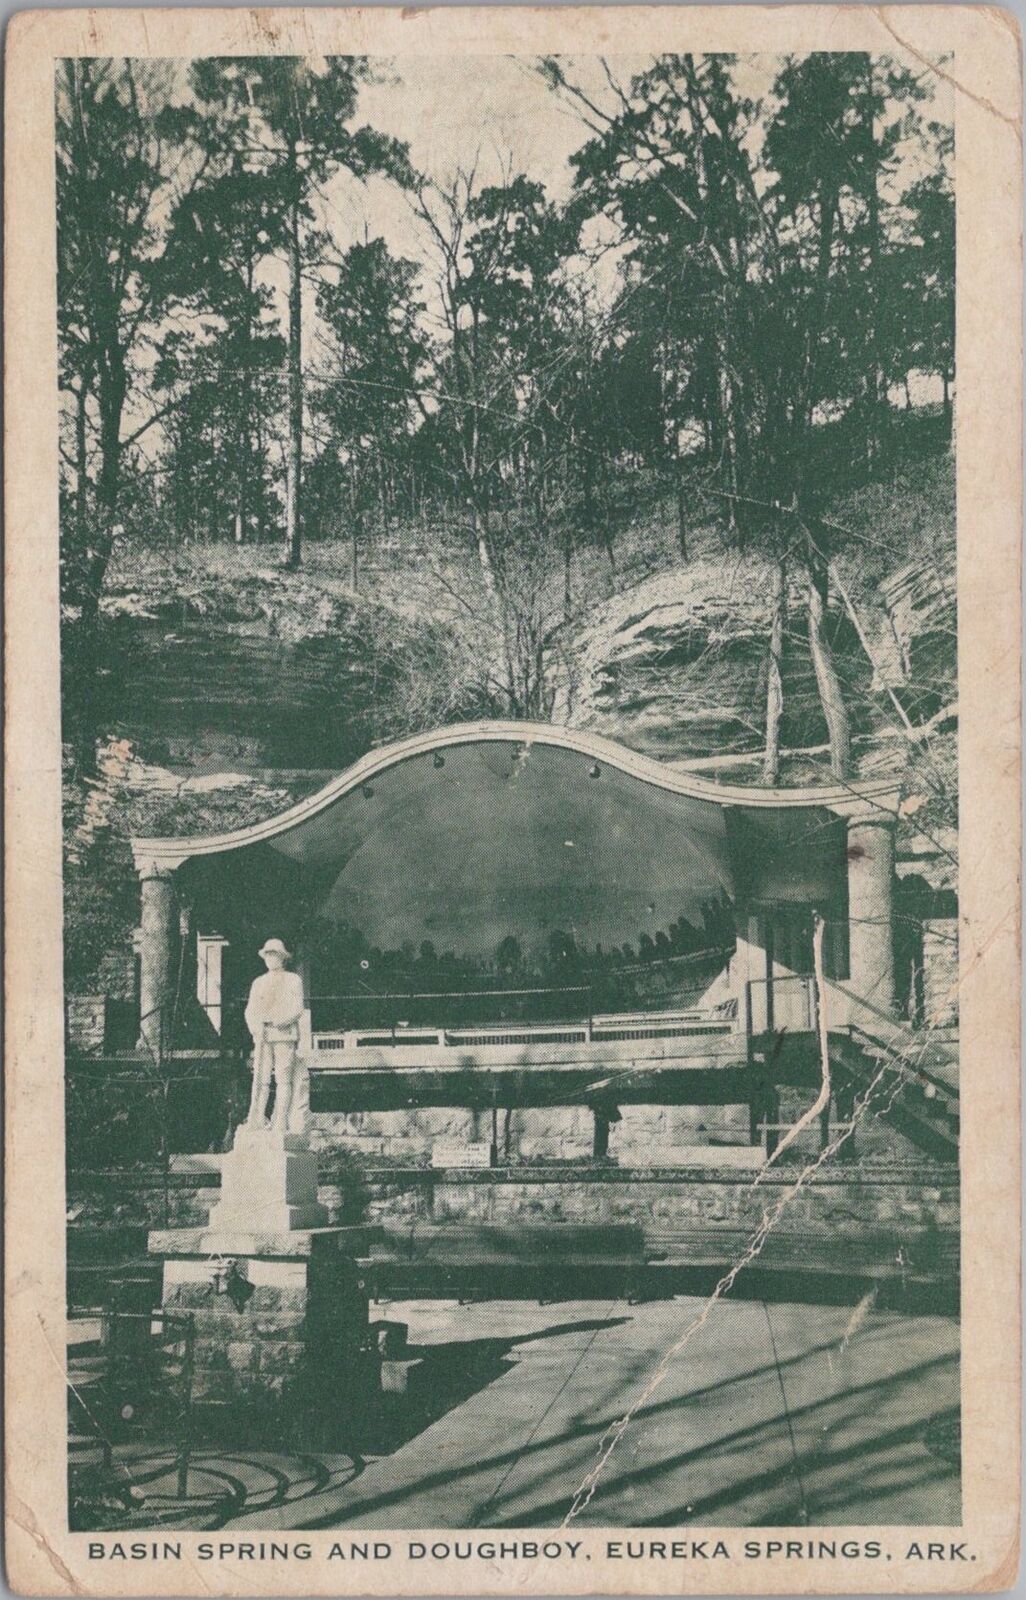 Basin Spring and Doughboy Eureka Springs Arkansas 1935 Postcard